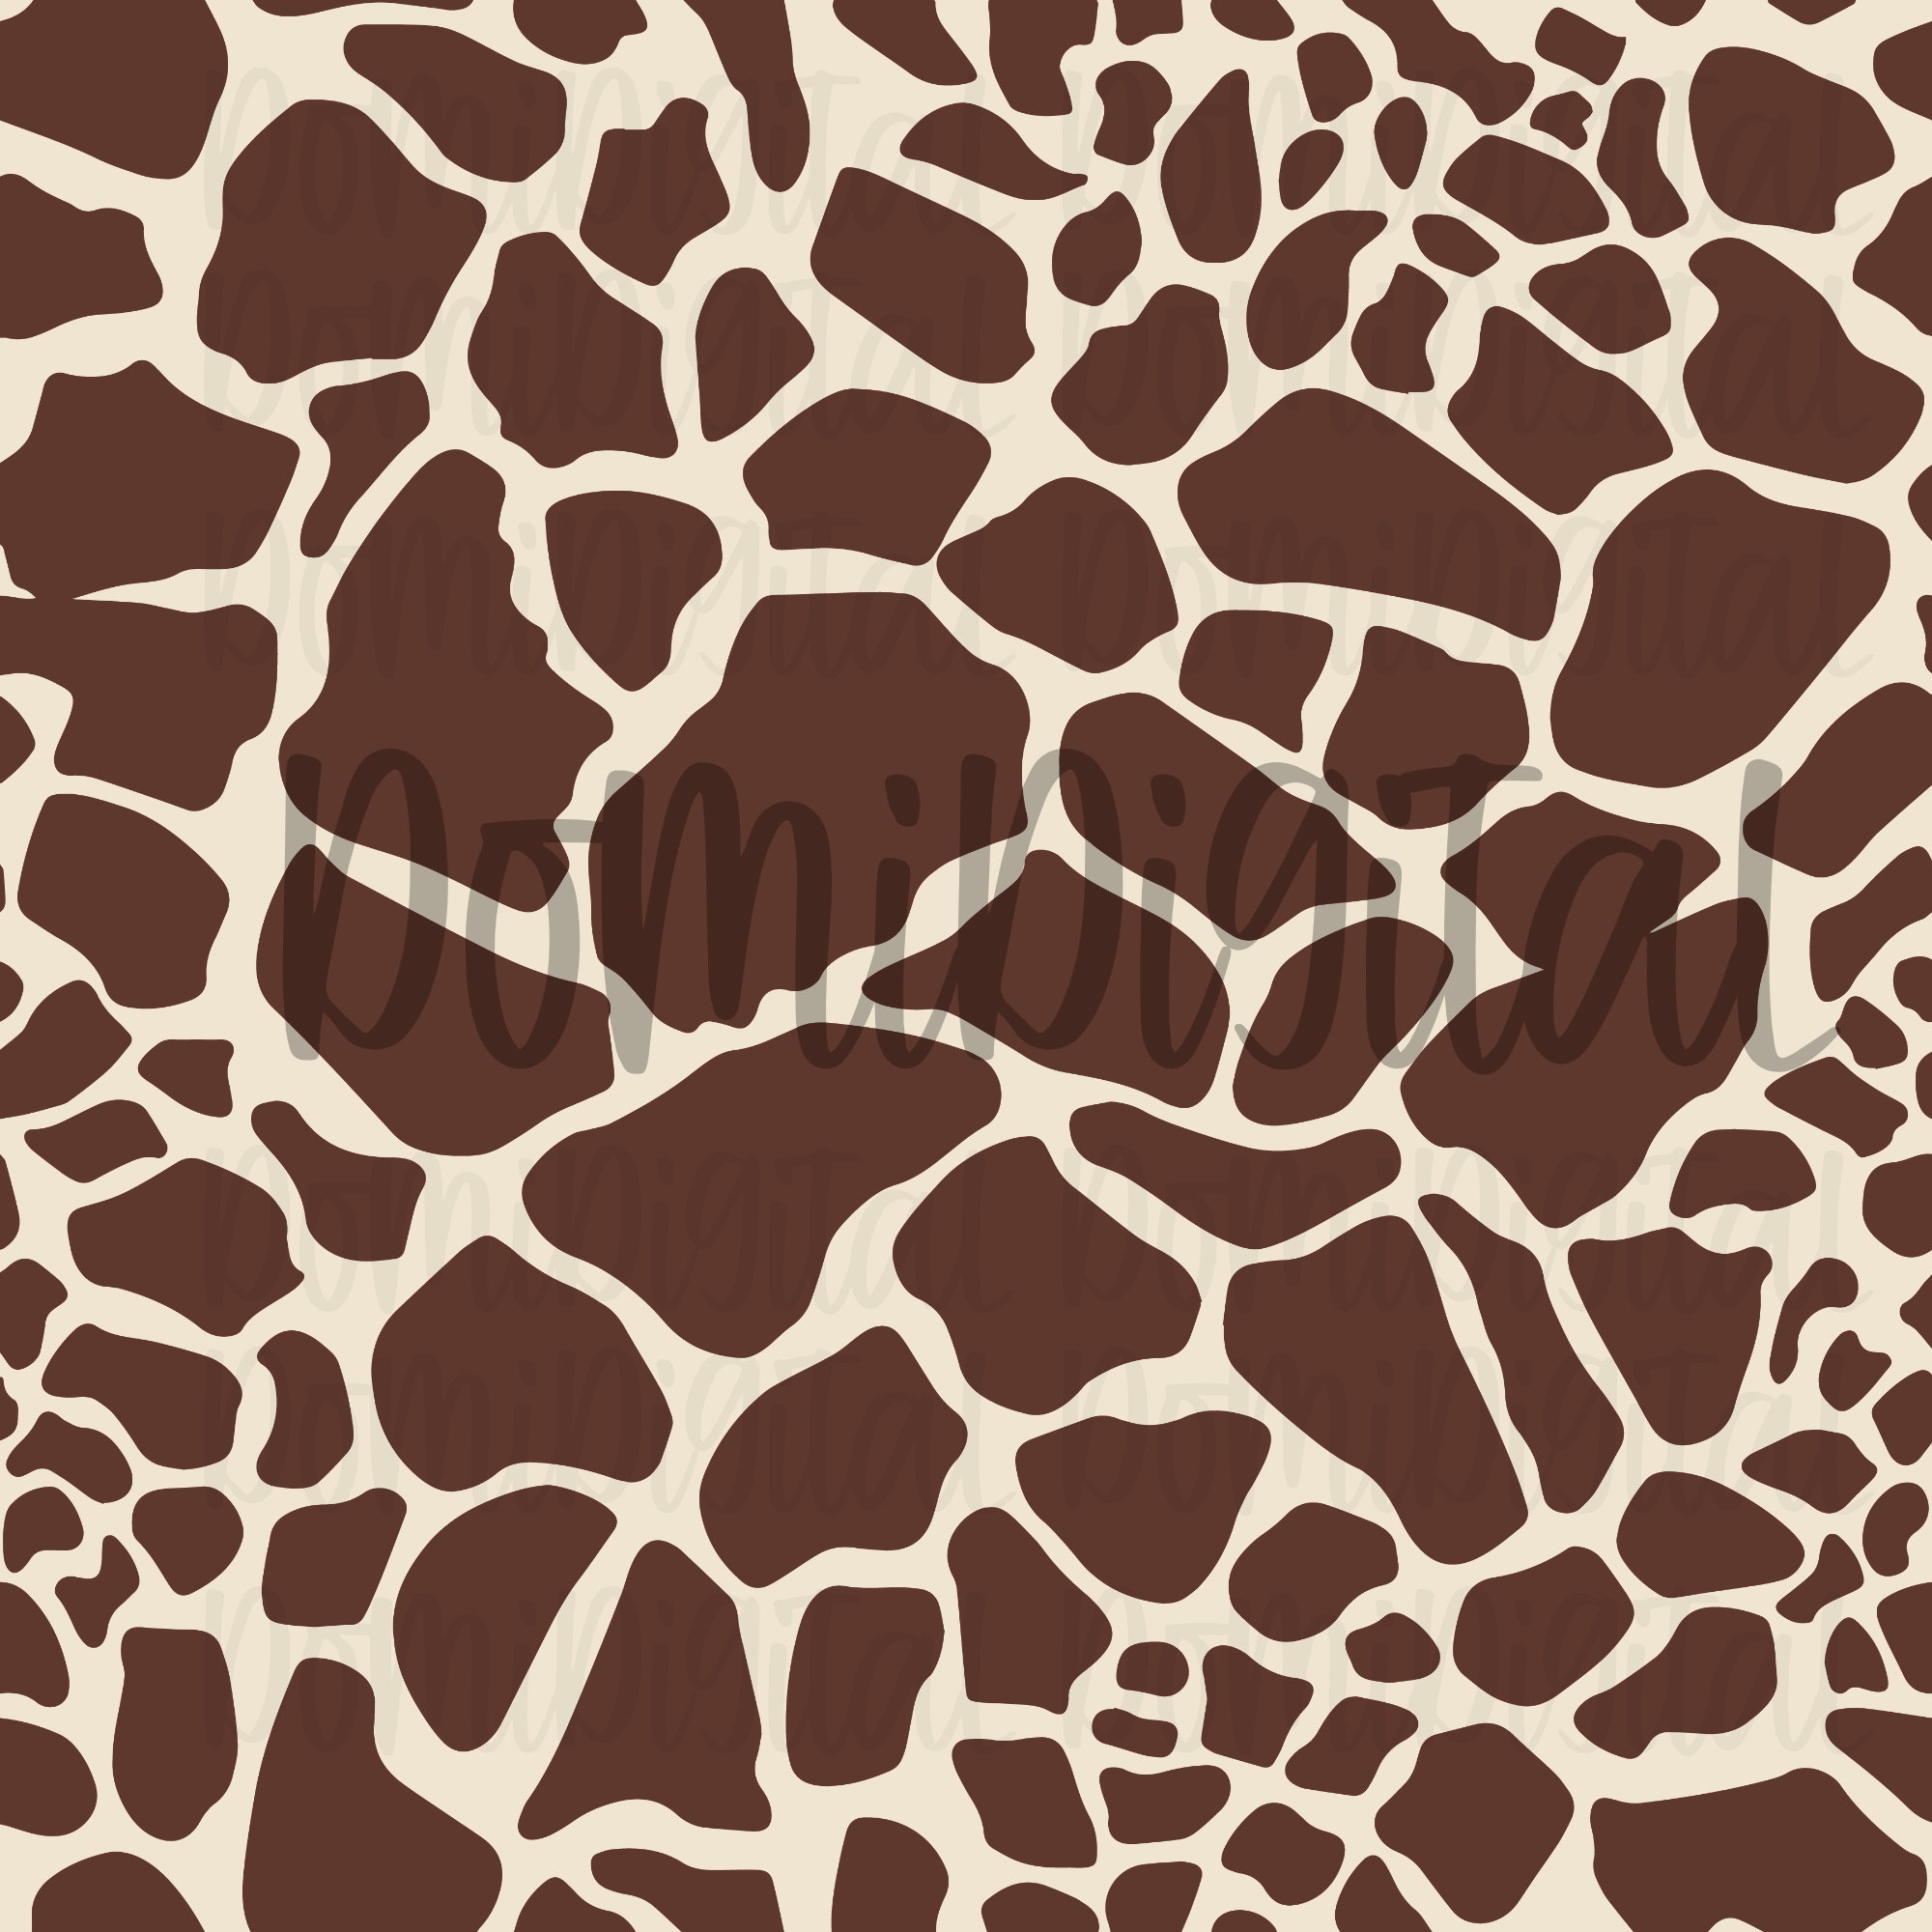 Giraffe Print Fabric by the Yard, Brown Animal Fur Pattern Print